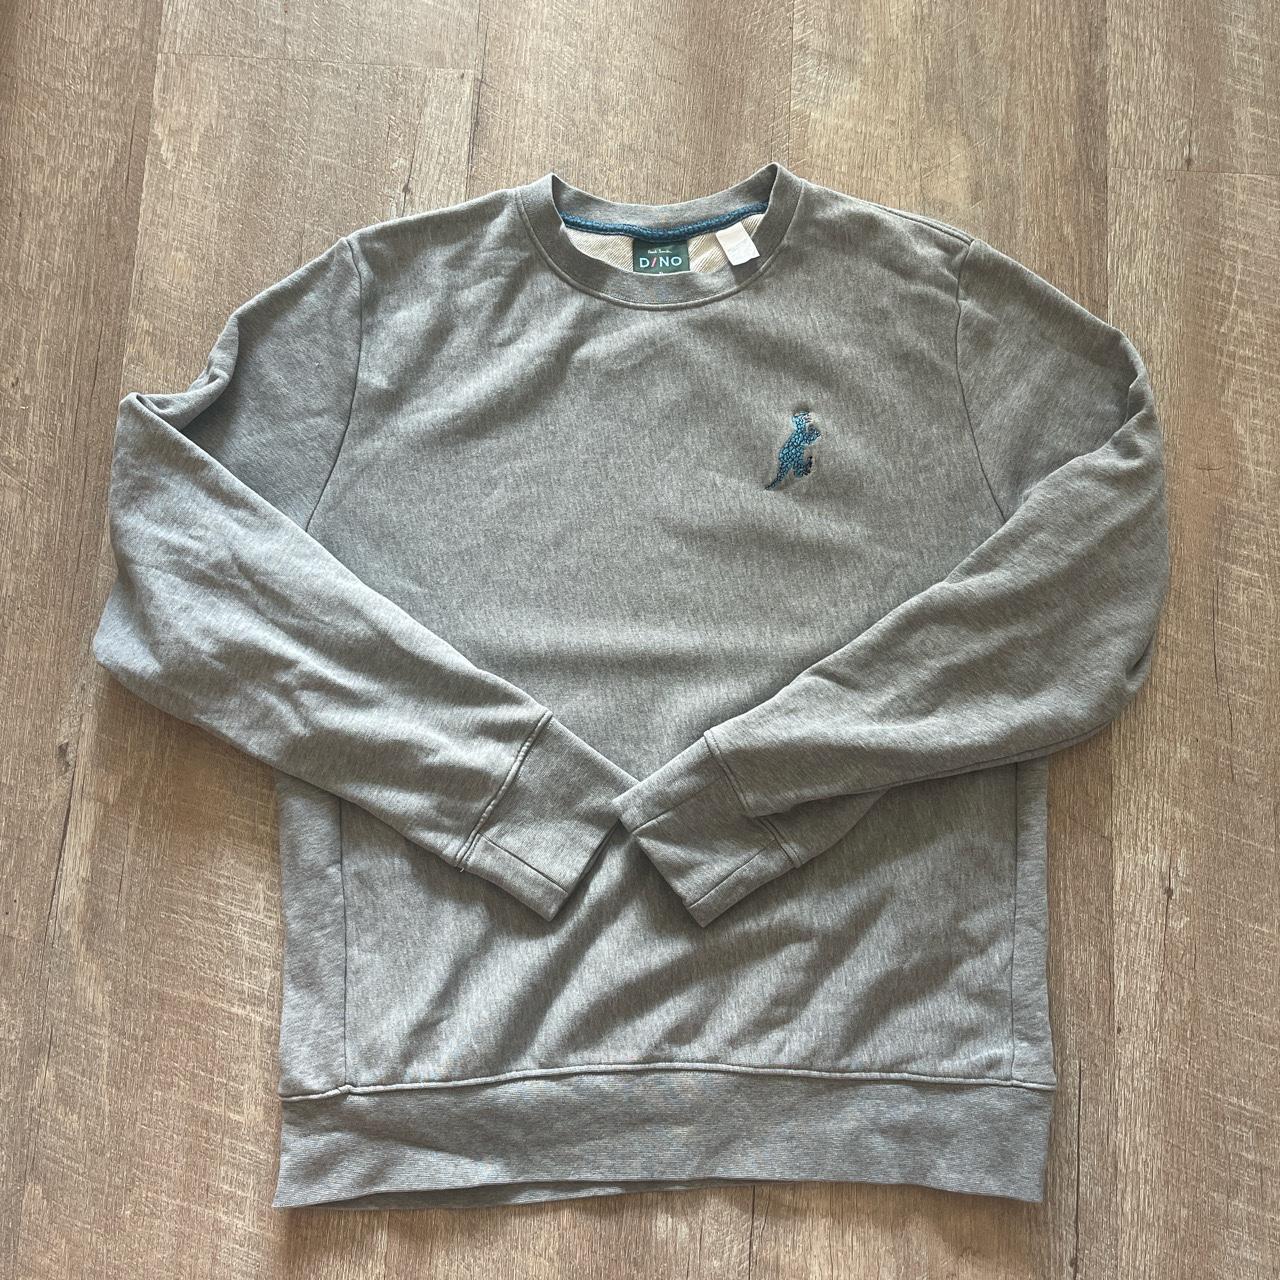 Paul Smith DINO sweater 🦕 100% cotton Perfect... - Depop